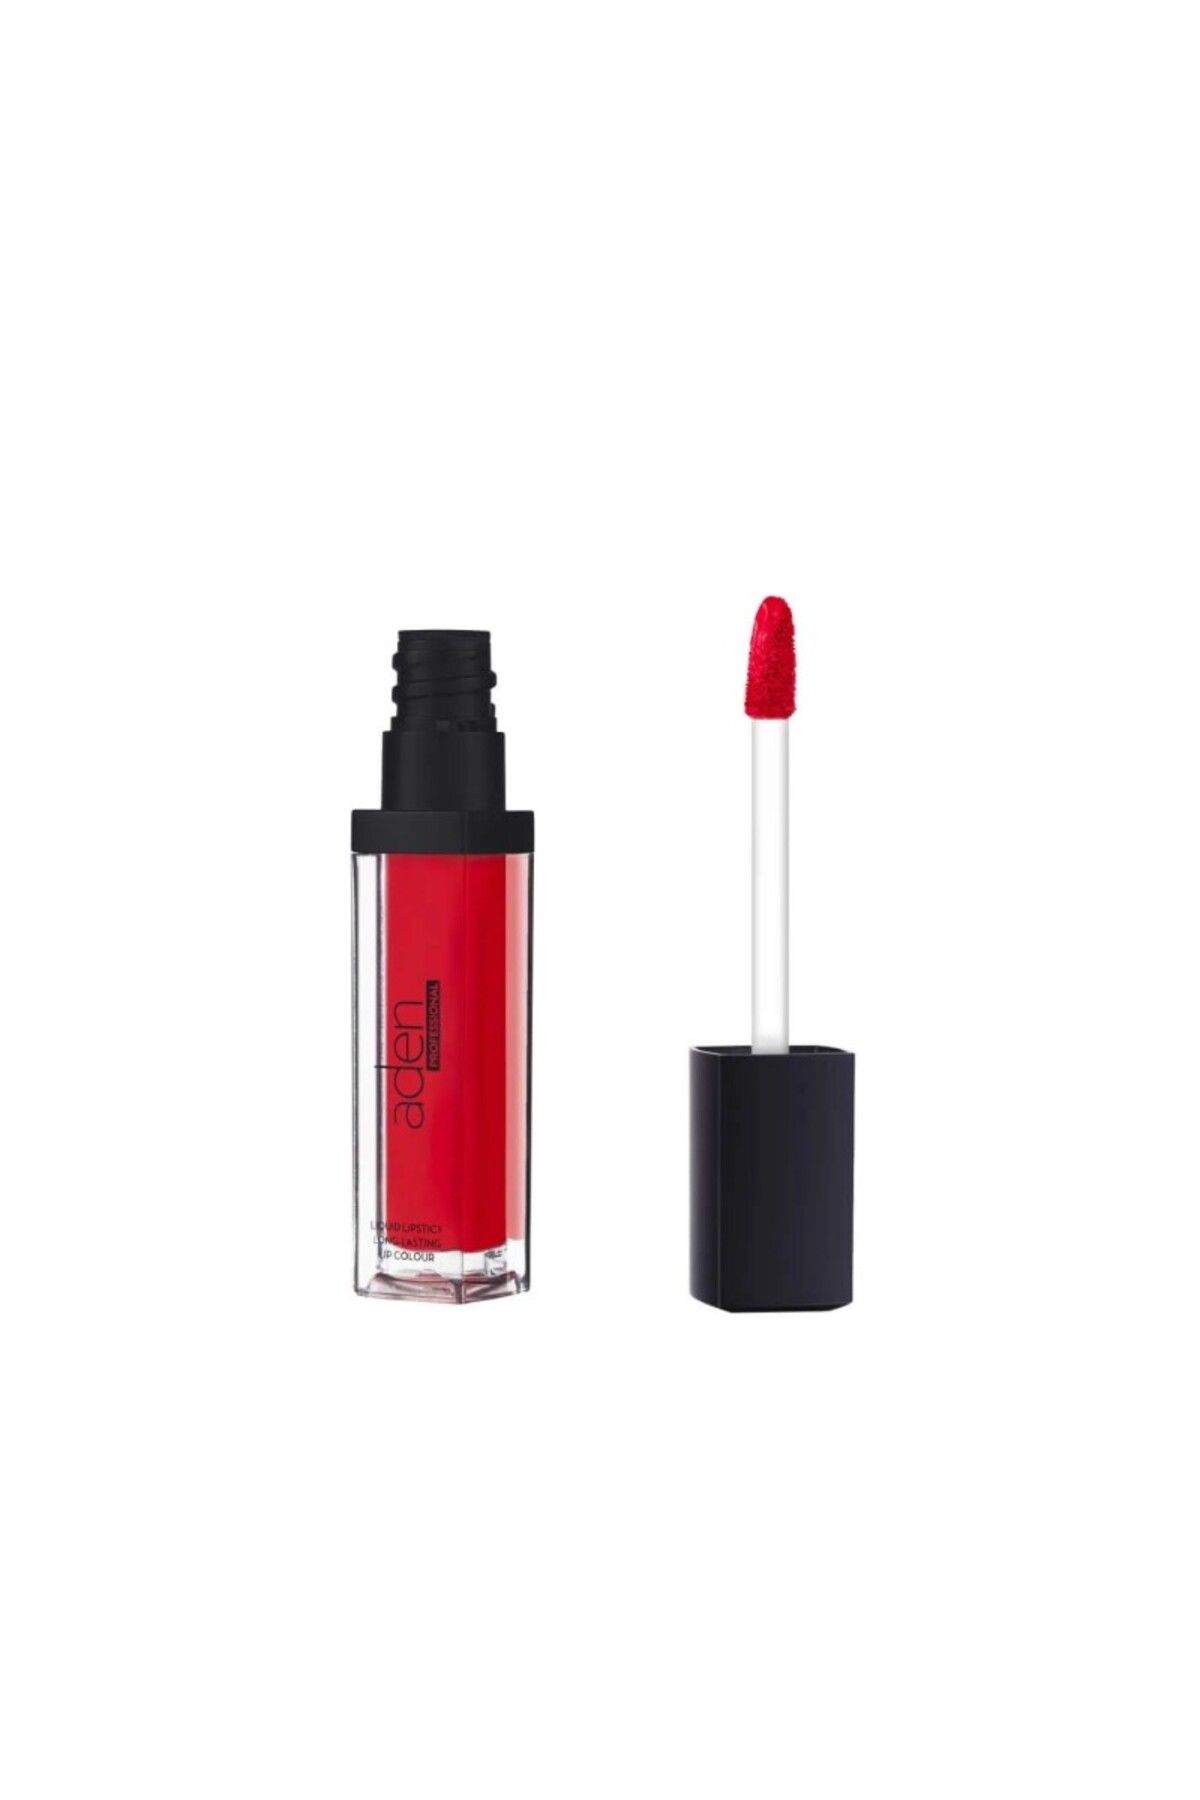 Aden Professional Liquid Lipstick ( 19 Raspberry )